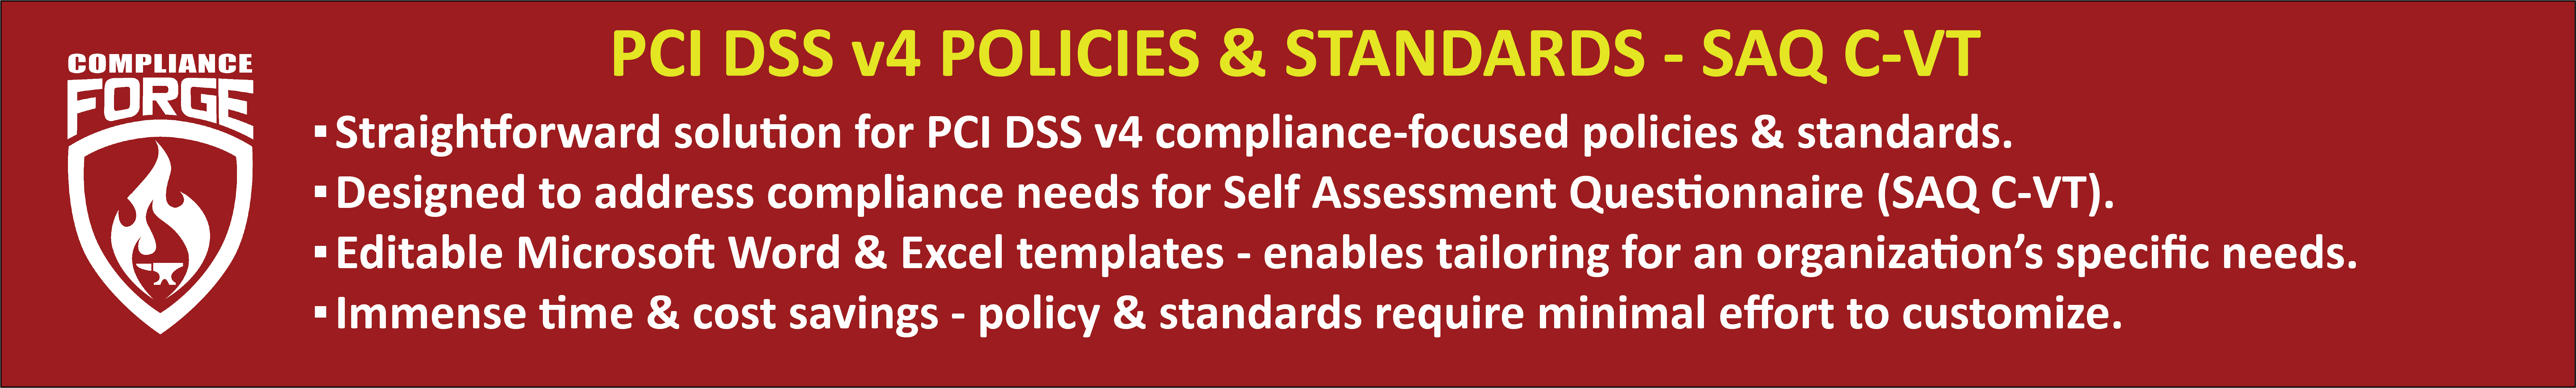 PCI DSS v4 SAQ C-VT policies and standards example